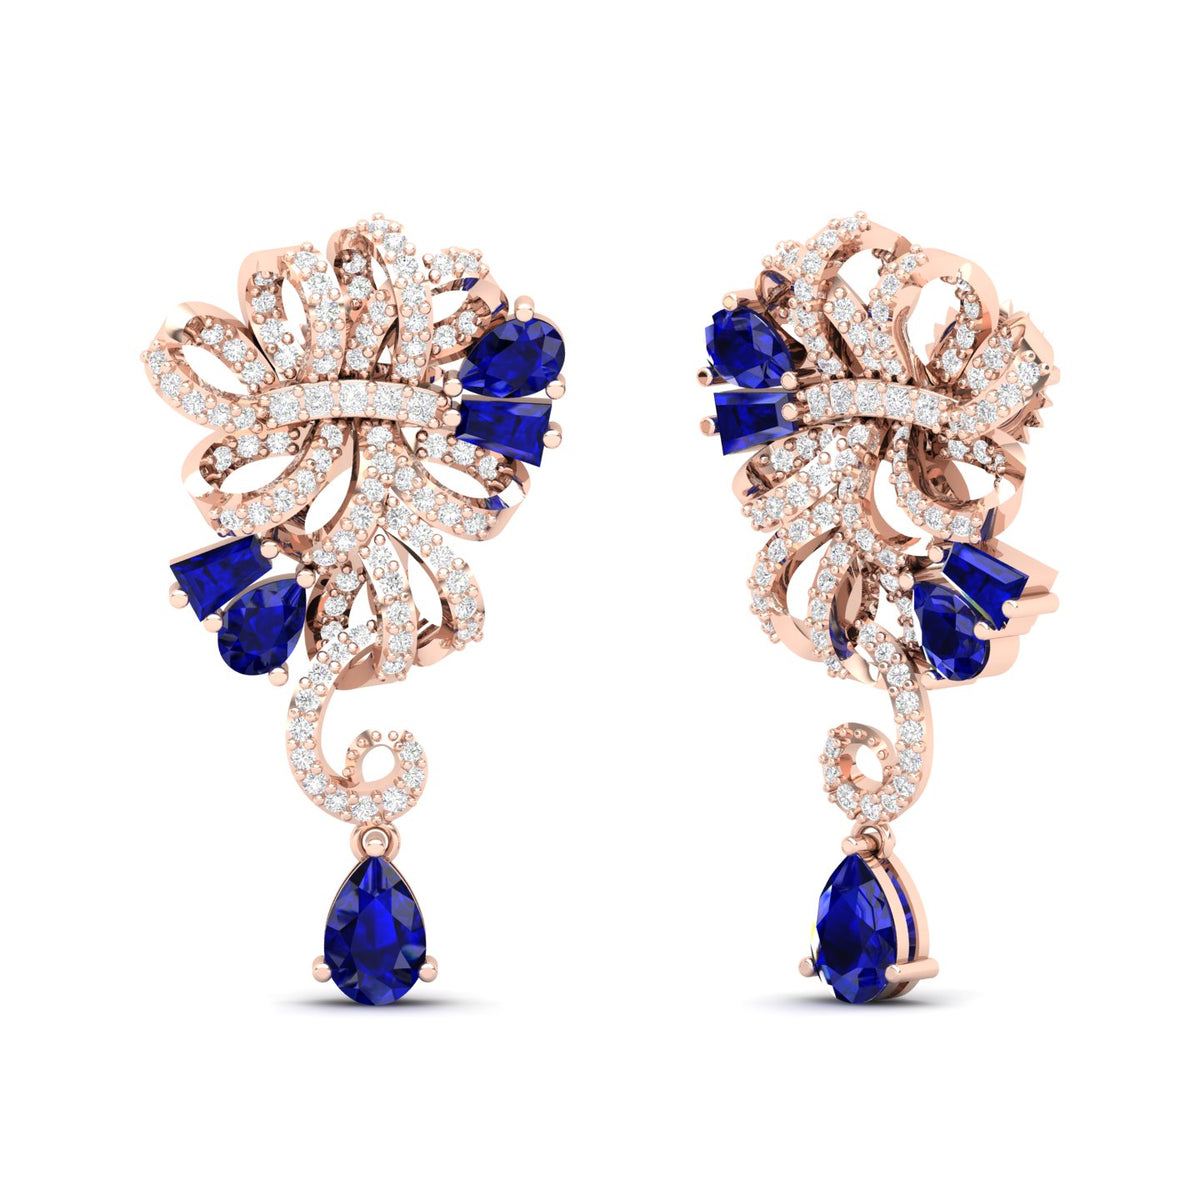 Maurya Mantle Blue Sapphire Drop Earrings with Diamonds